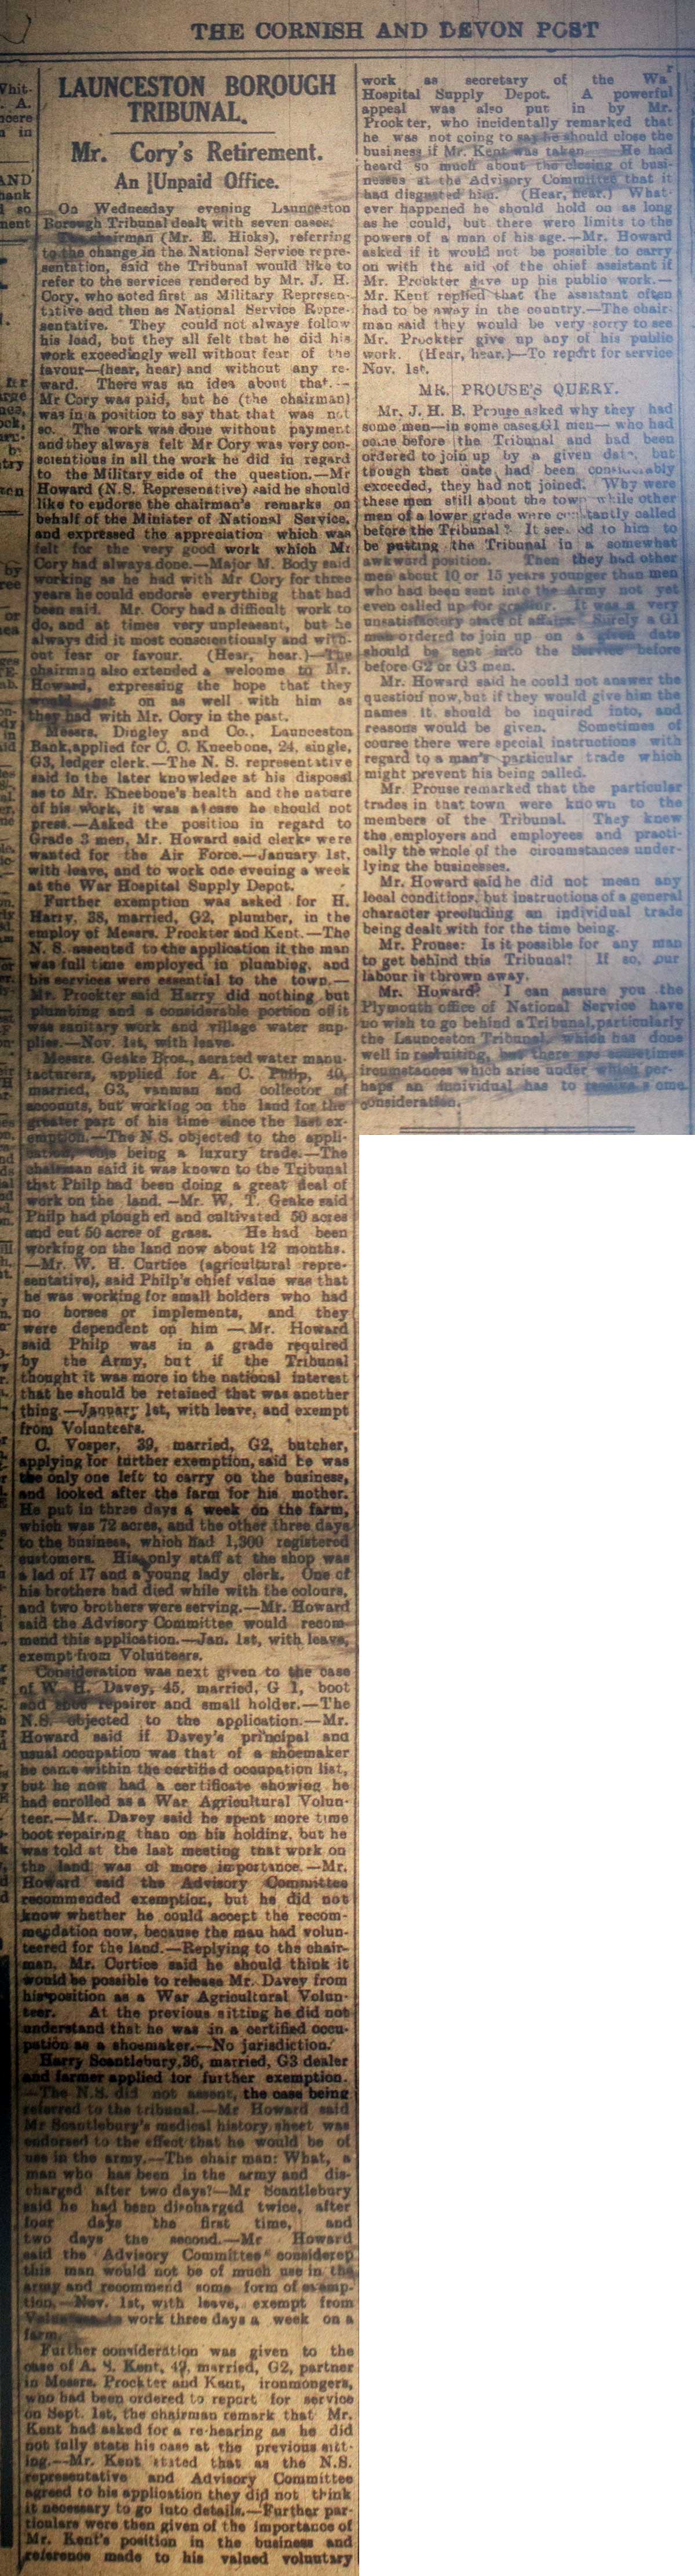 Launceston Tribunal, August 10th, 1918.